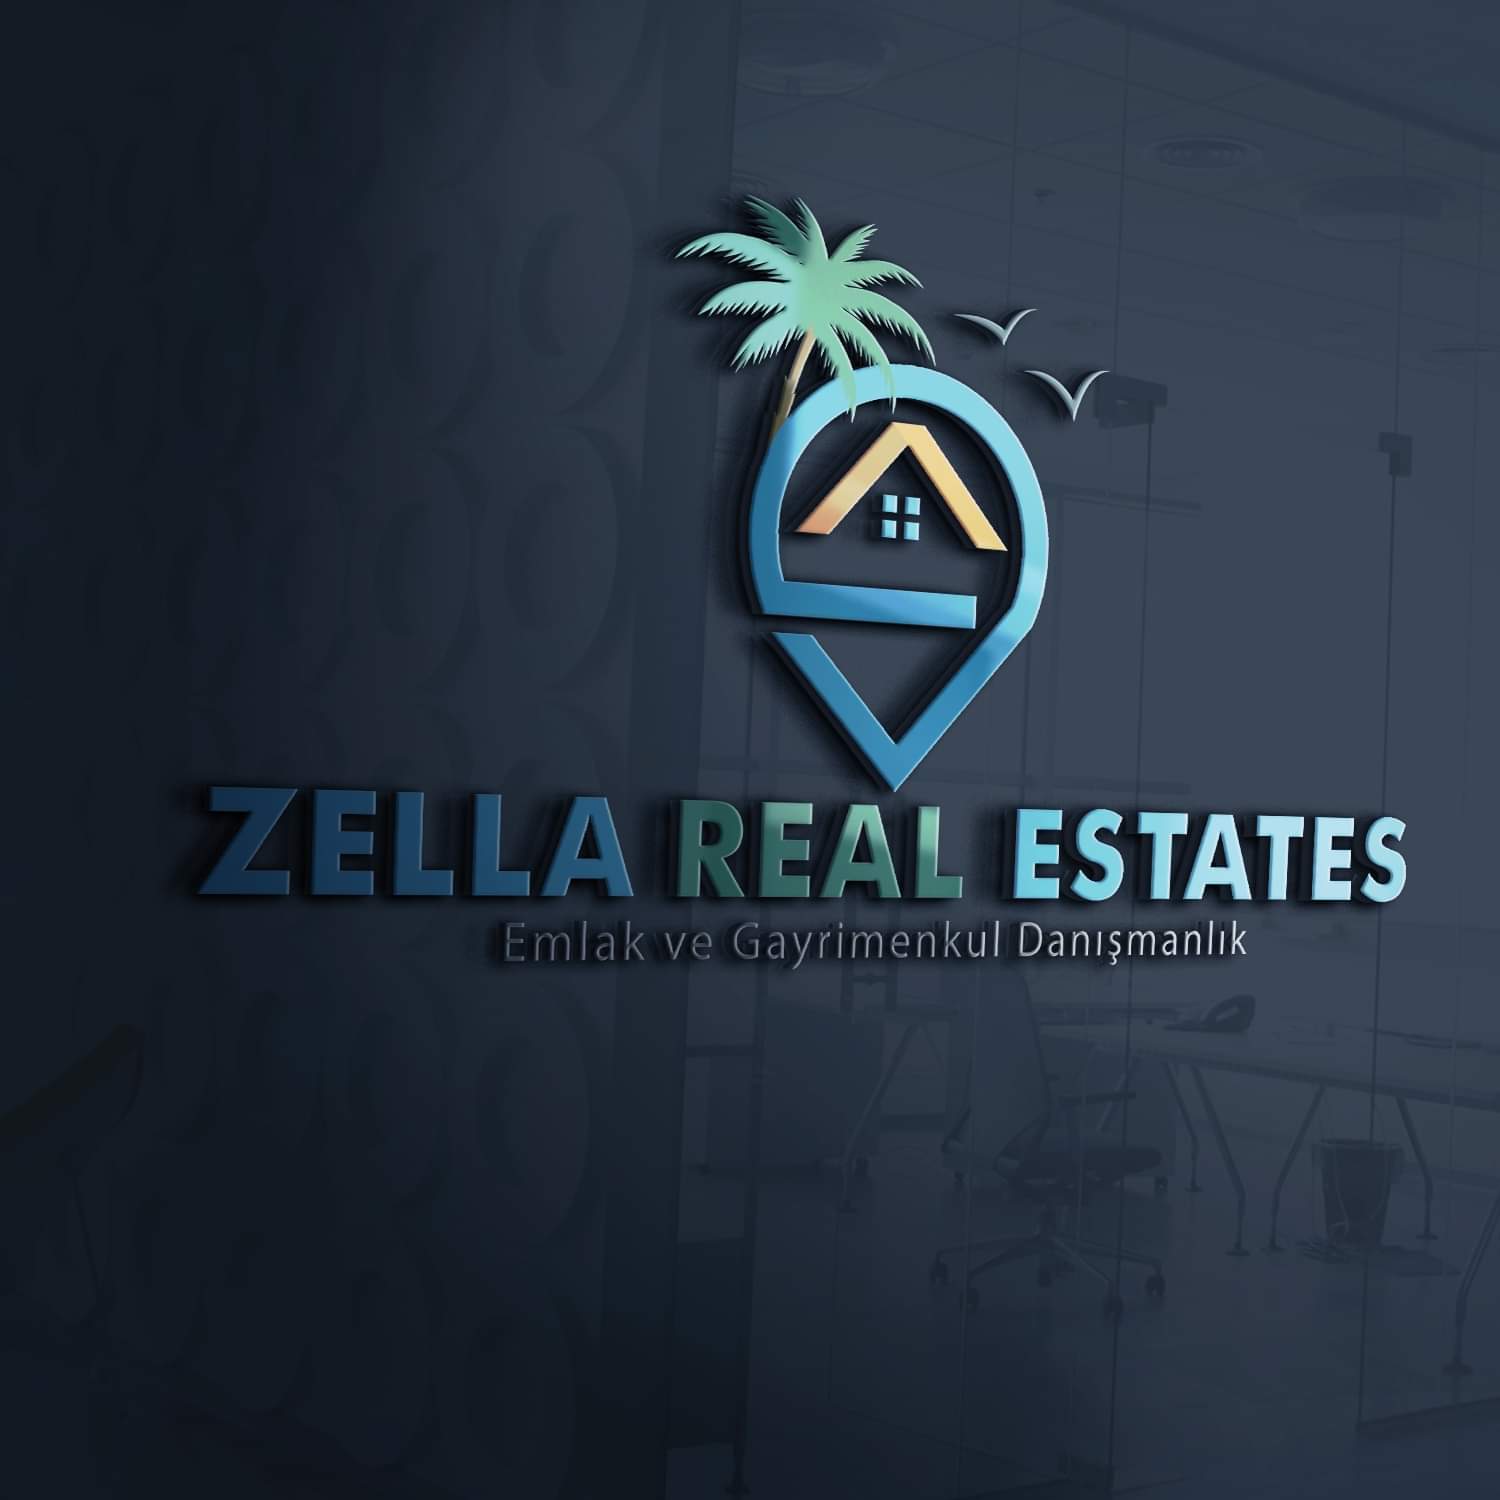 Zella Real Estates